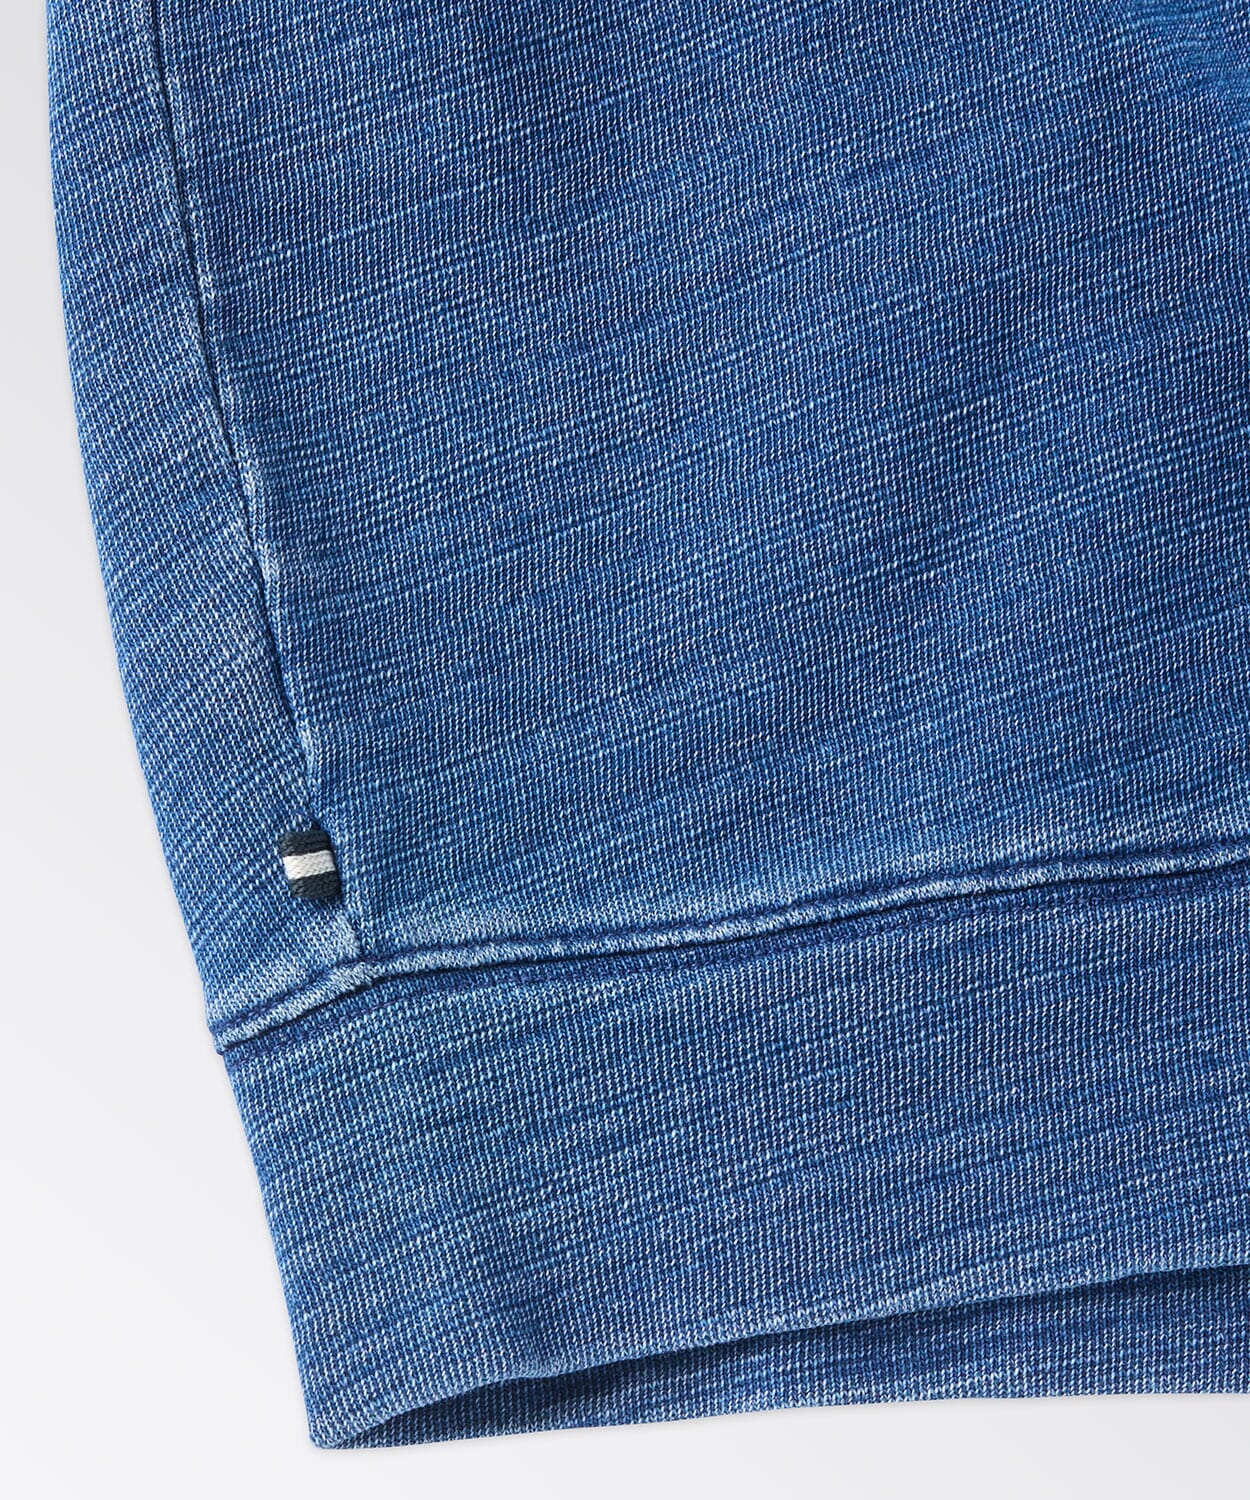 Close up of Sweatshirt's Side Tab Label